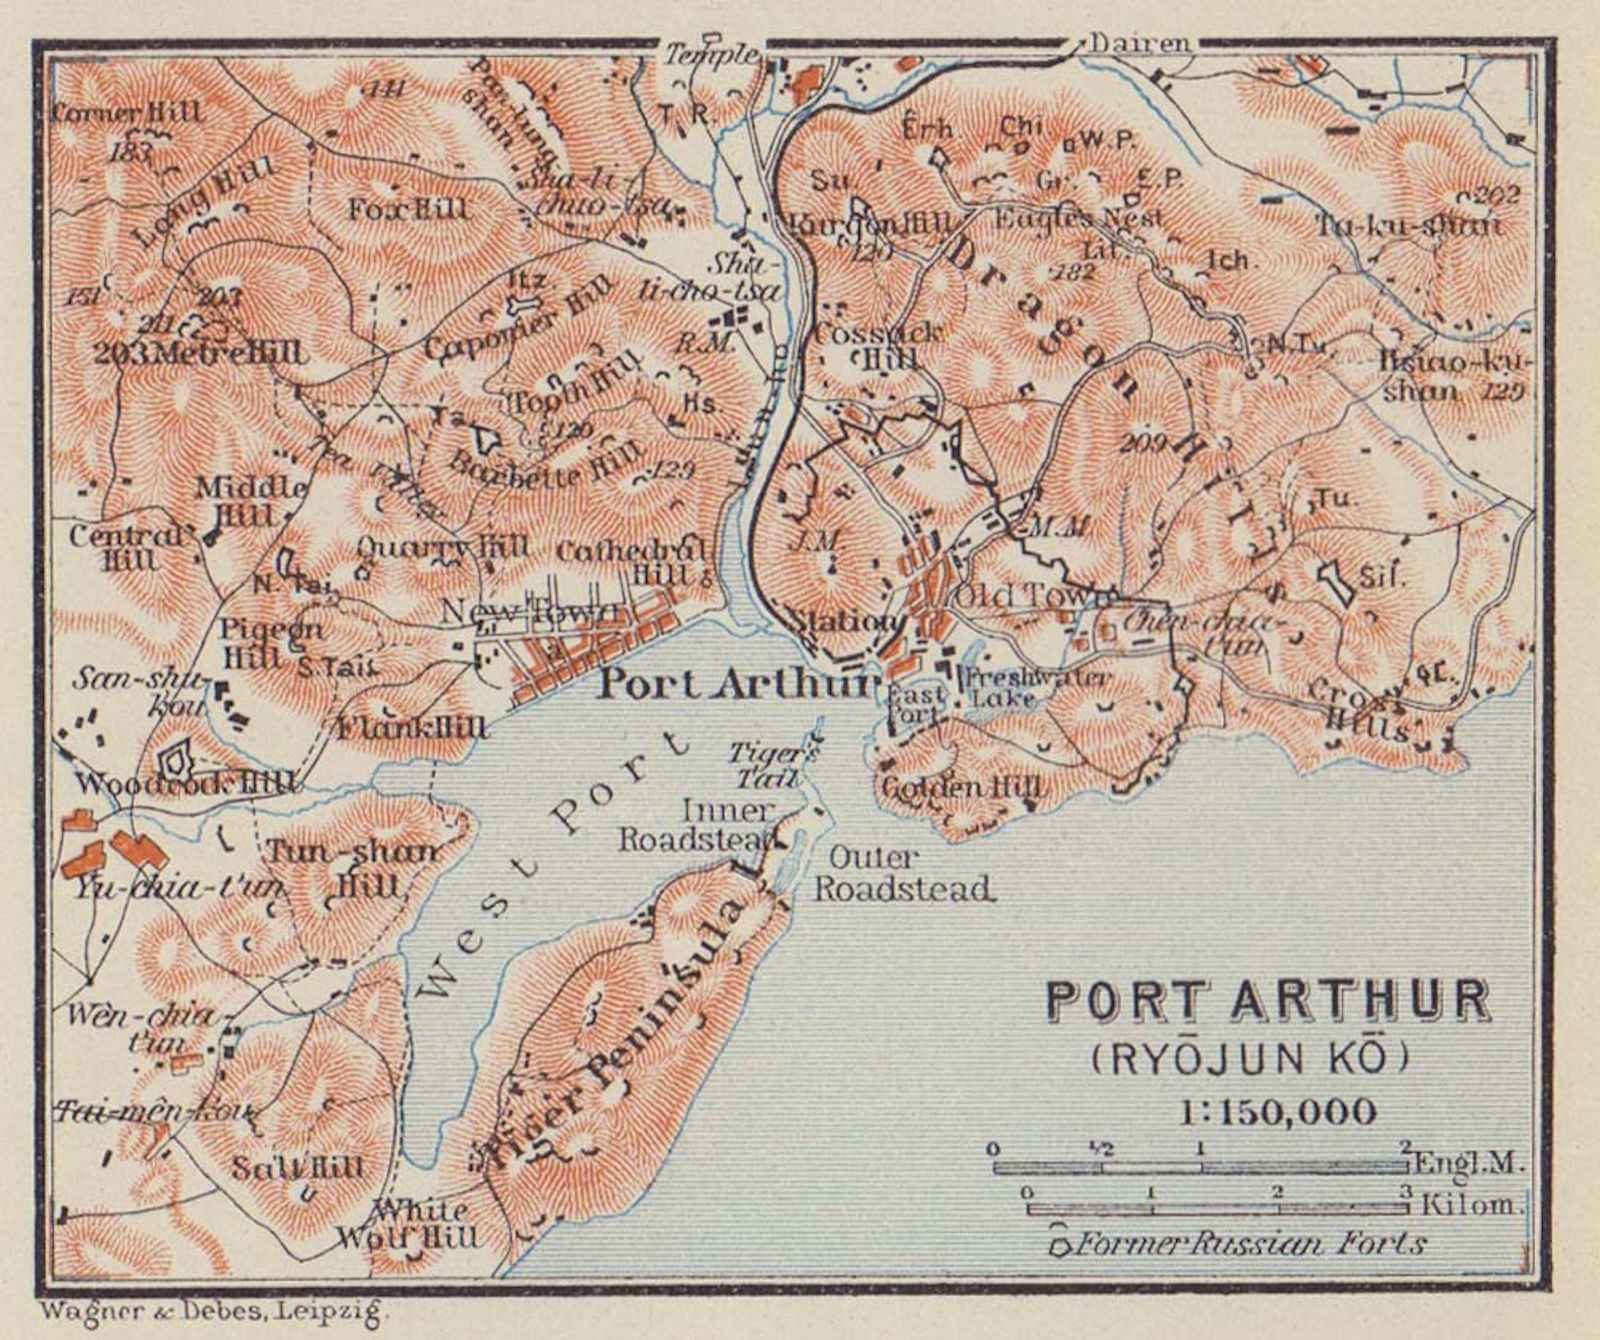 Port Arthur city plan Lüshunkou/Lvshunkou District Ryojun China. SMALL 1914 map